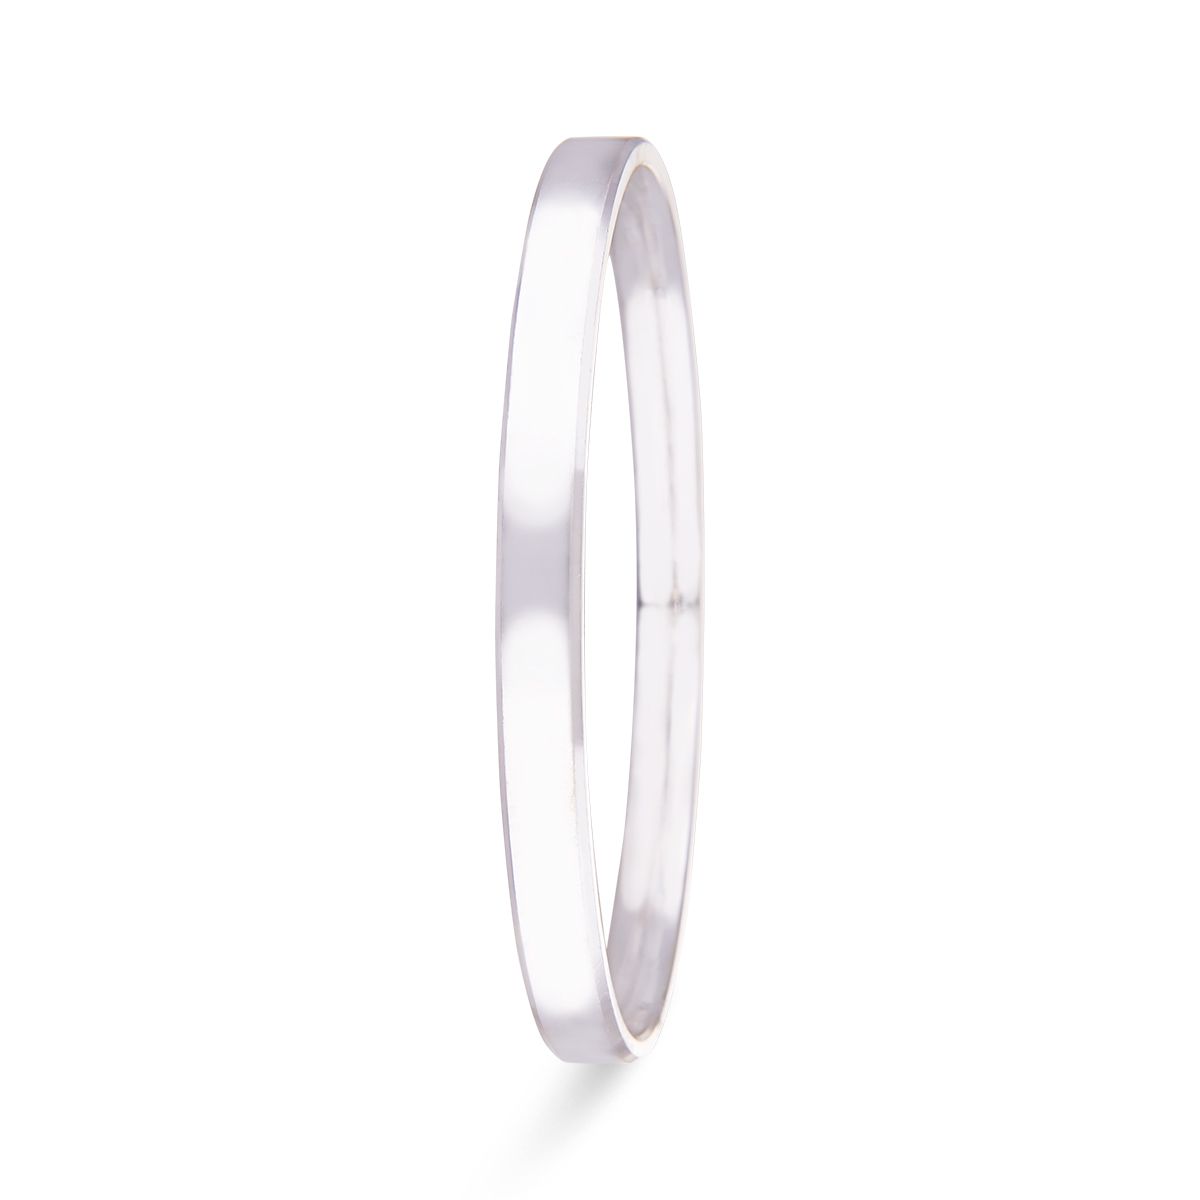 Buy ZAVYA Elegant and Sleek 925 Sterling Silver Mens Ring | Shoppers Stop